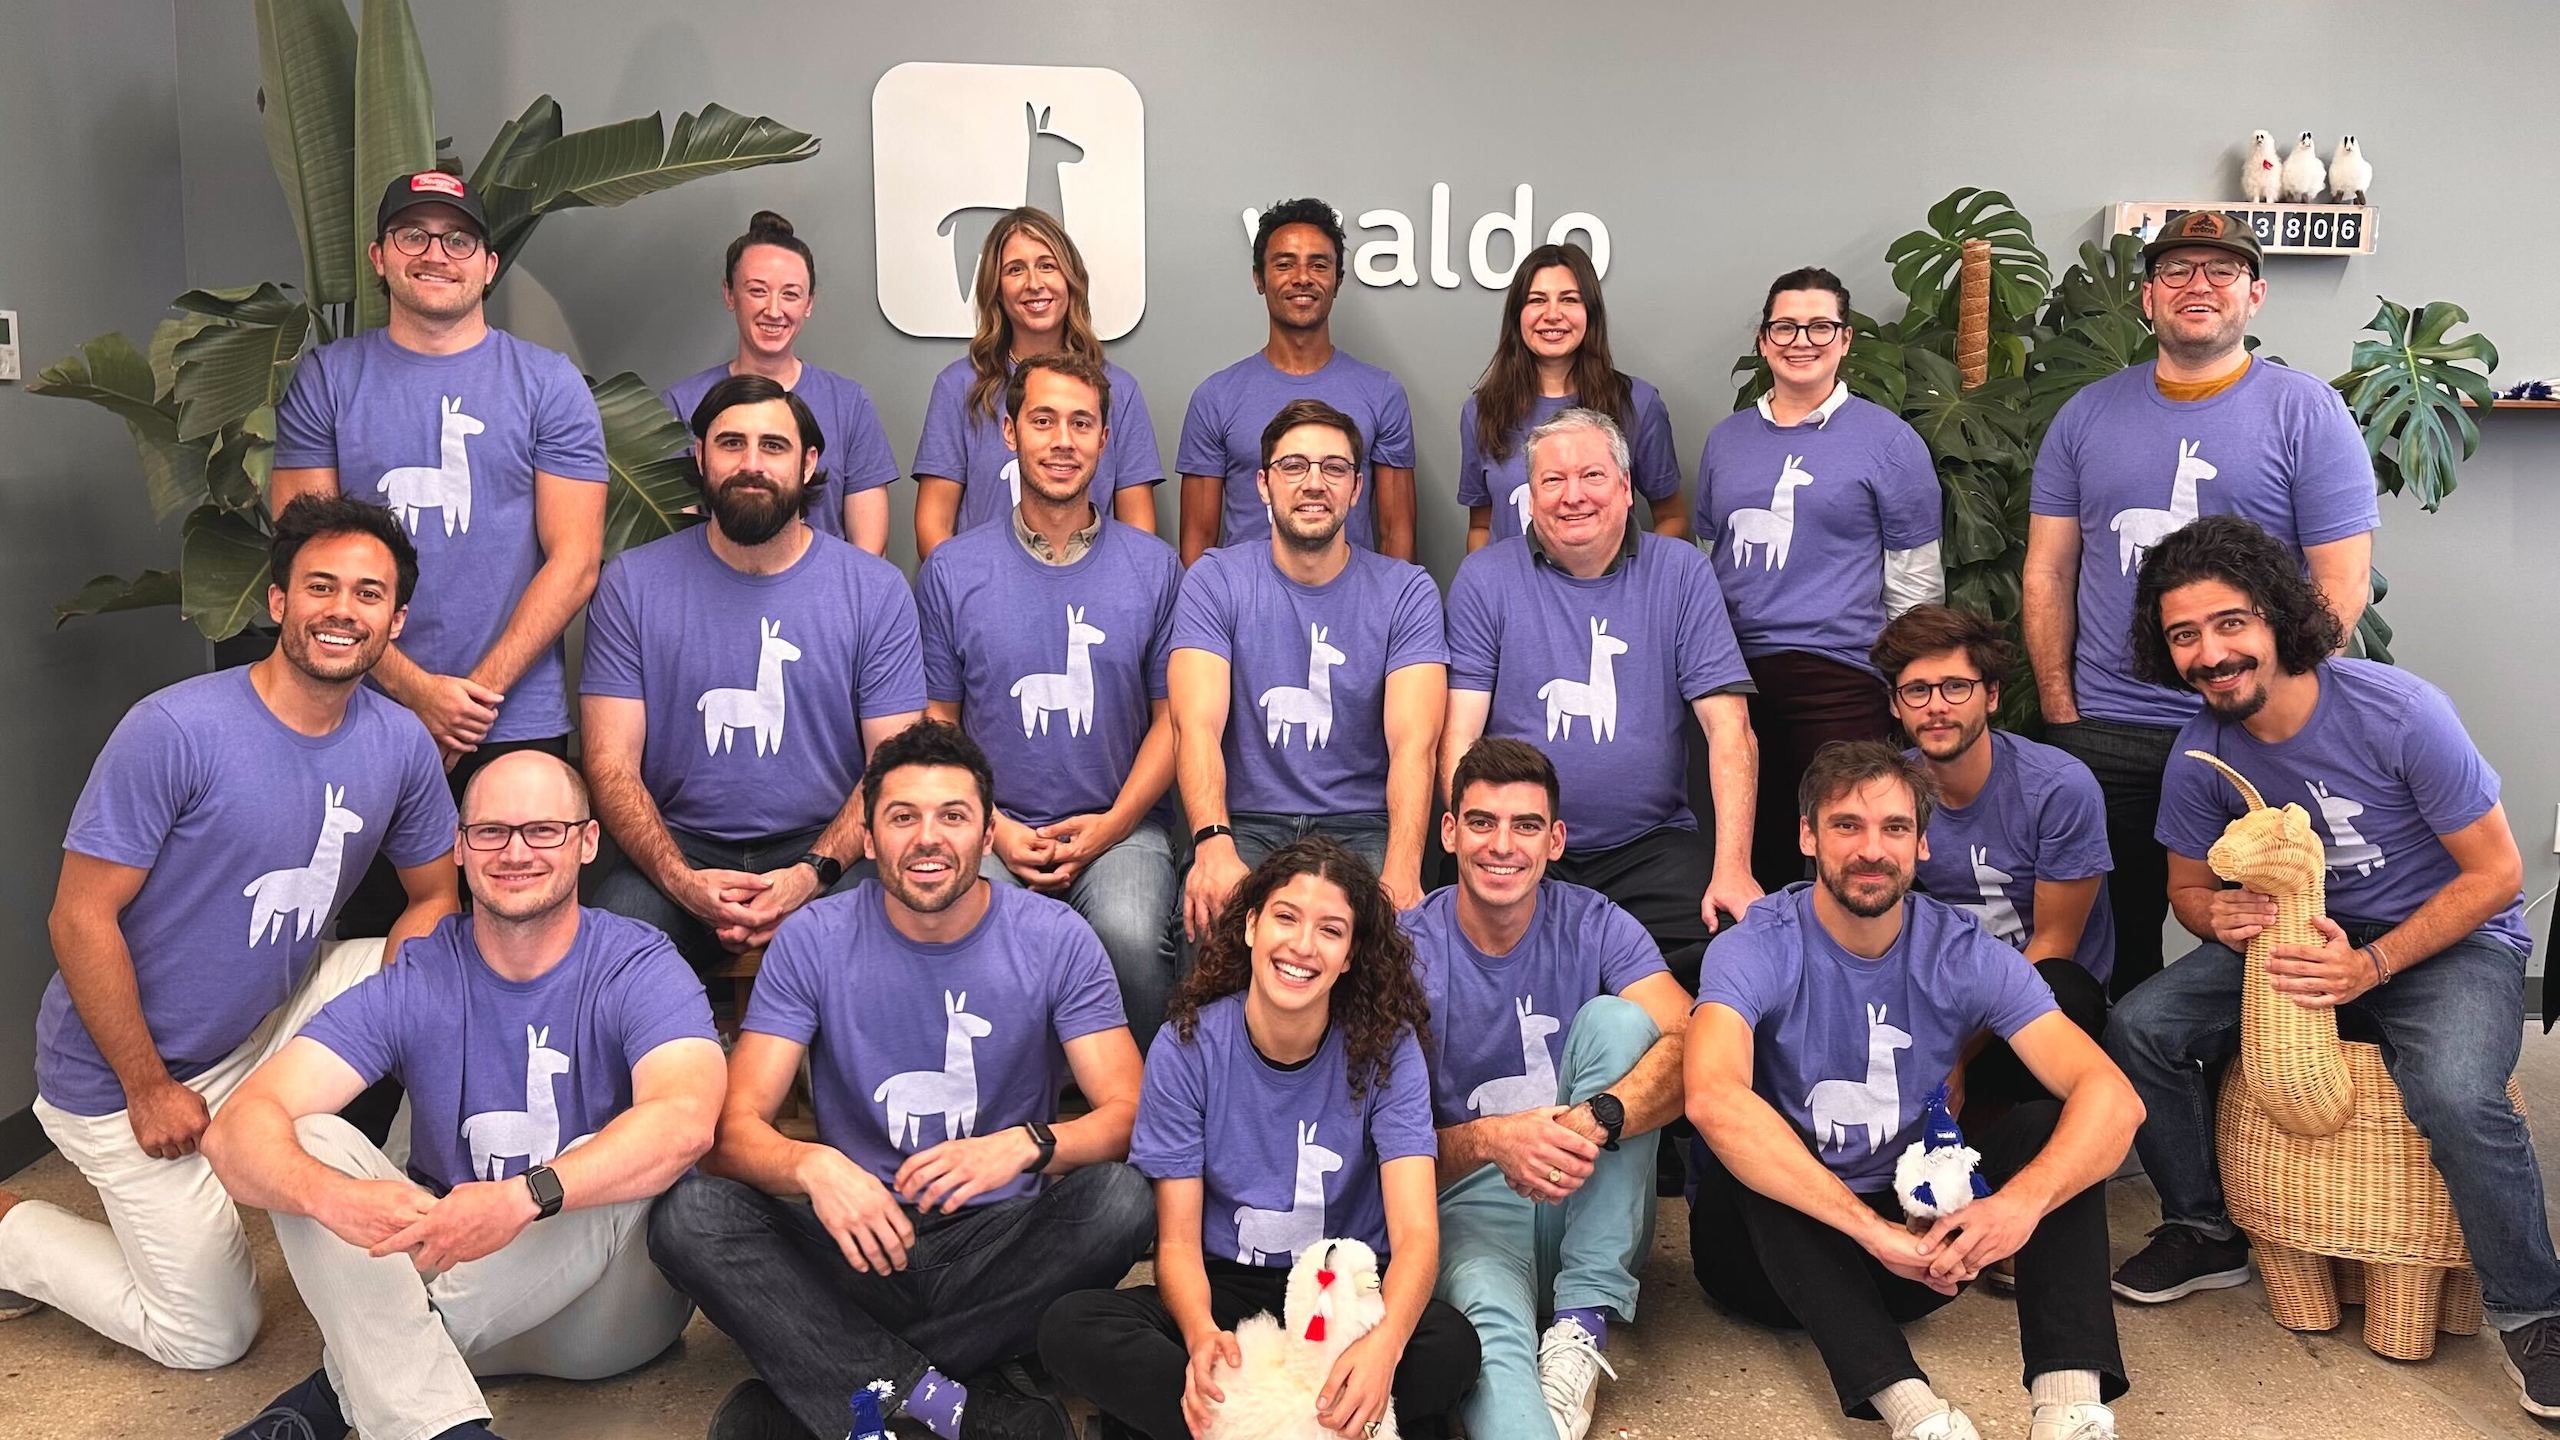 Waldo’s team poses in matching shirts bearing the company’s logo.